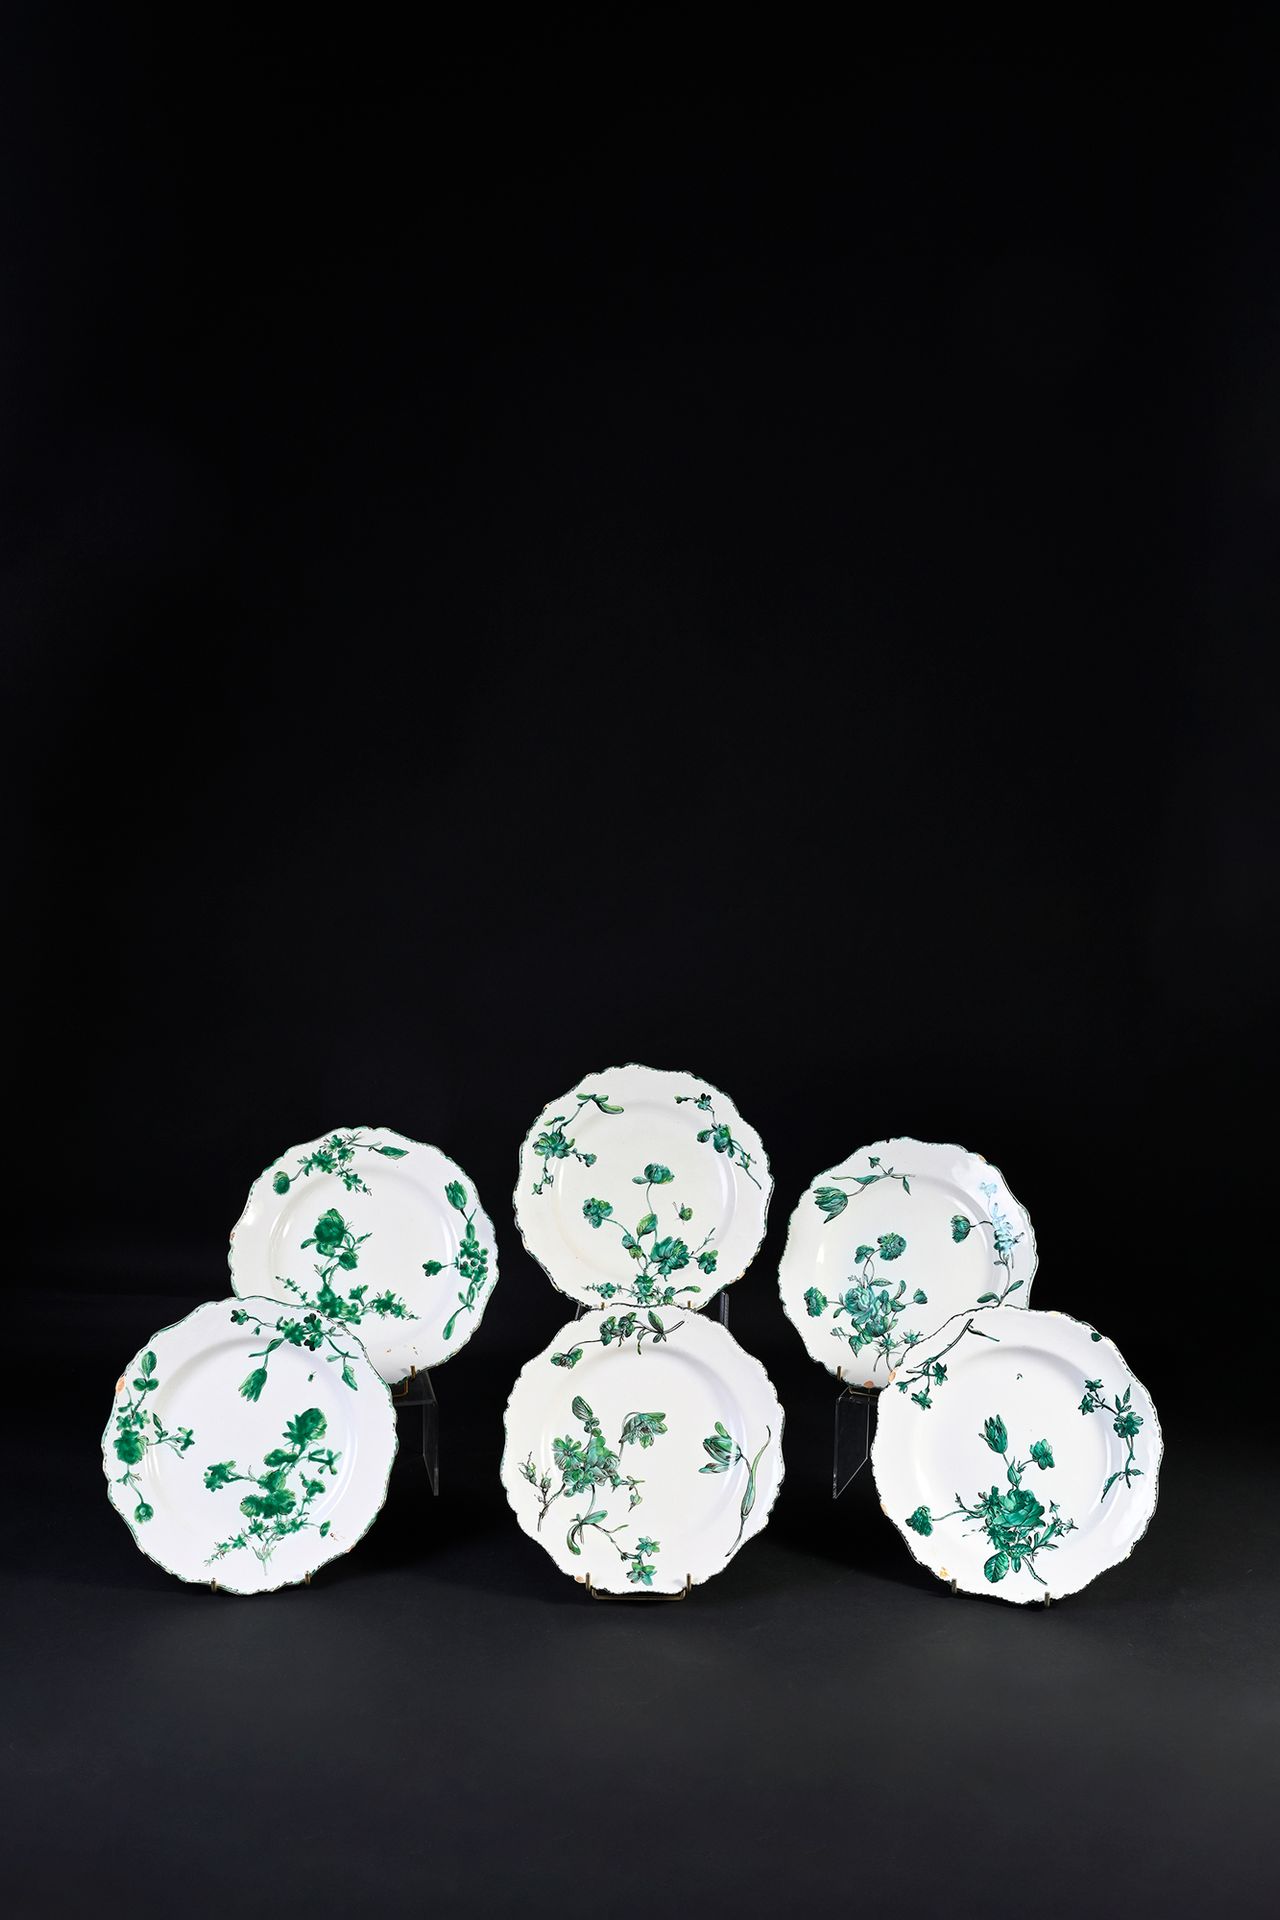 Null 六个18世纪马赛辉石板
四个带有Veuve的锰质标记的VP
佩兰
外形，有绿色的卡马伊乌装饰，花束和花朵被抛在中心之外，边缘有狼牙，有小的碎片和裂缝
&hellip;